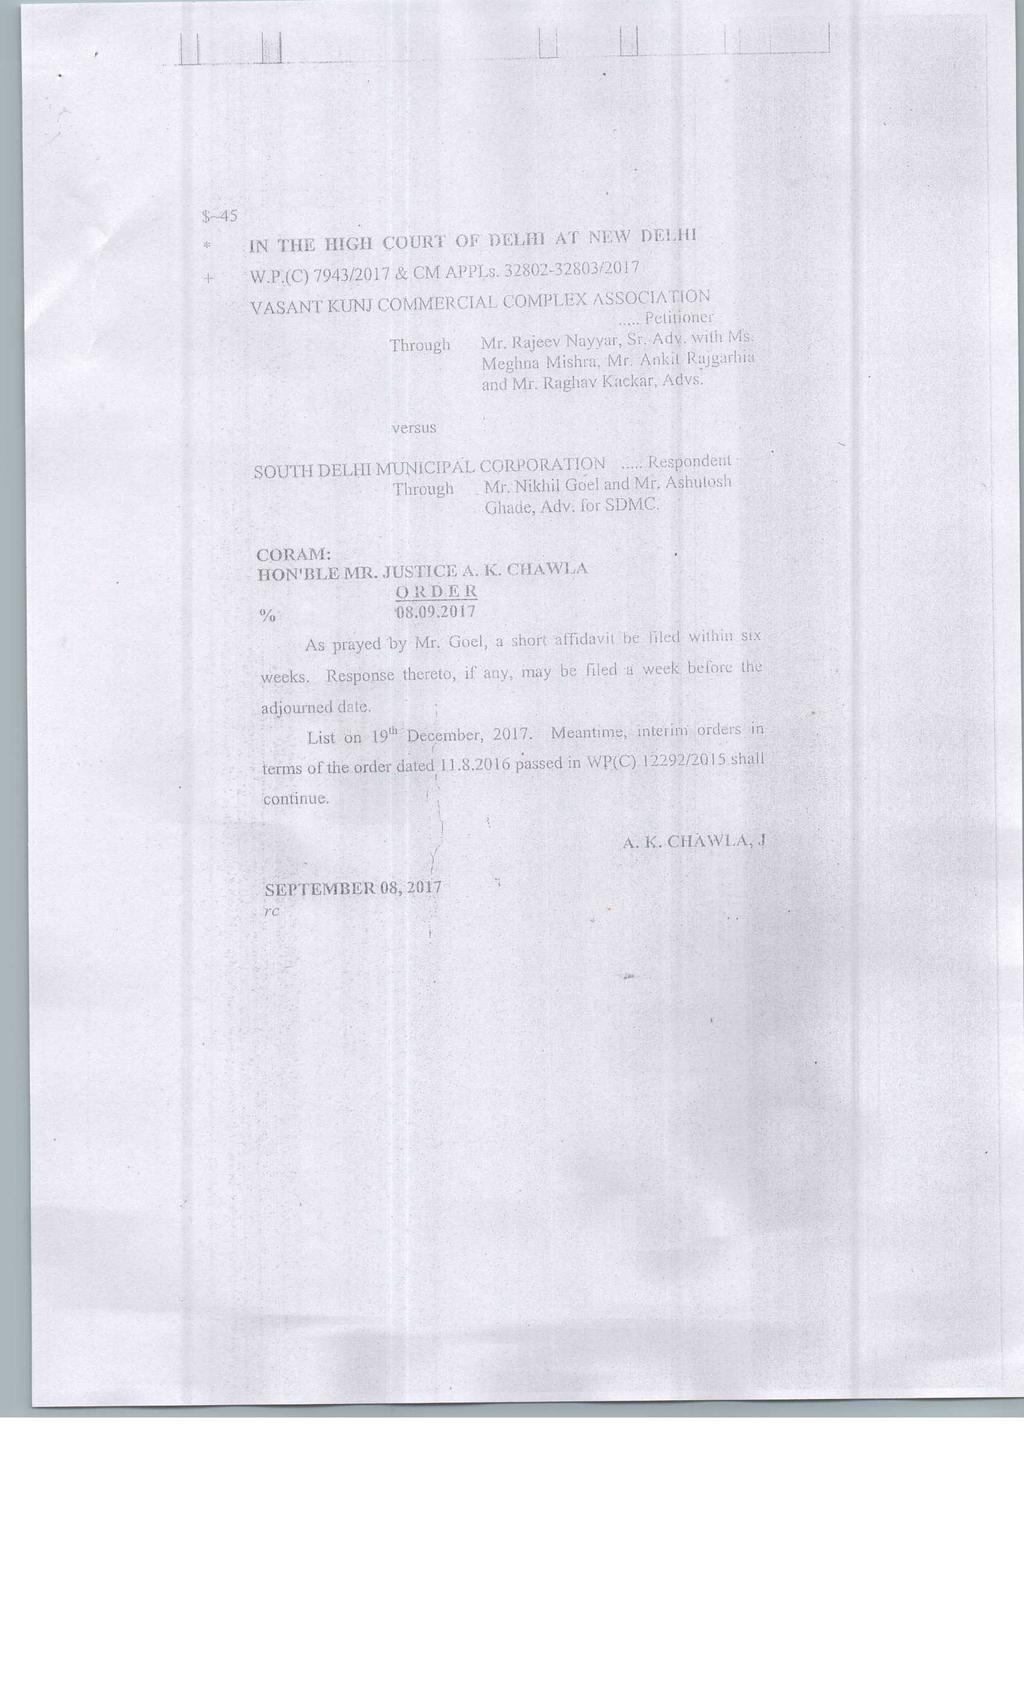 ...Liil..U.11 $-45 IN THE HIGH COURT OF DELHI AT NEW DELHI ' W.P,(C) 7943/2017 & CM APPLs. 32802-32803/2017 VASANT KUNJ COMMERCIAL COMPLEX ASSOCIATION '..., Petuionei ' Through Mr. Rajeev Nayyar, Sr.